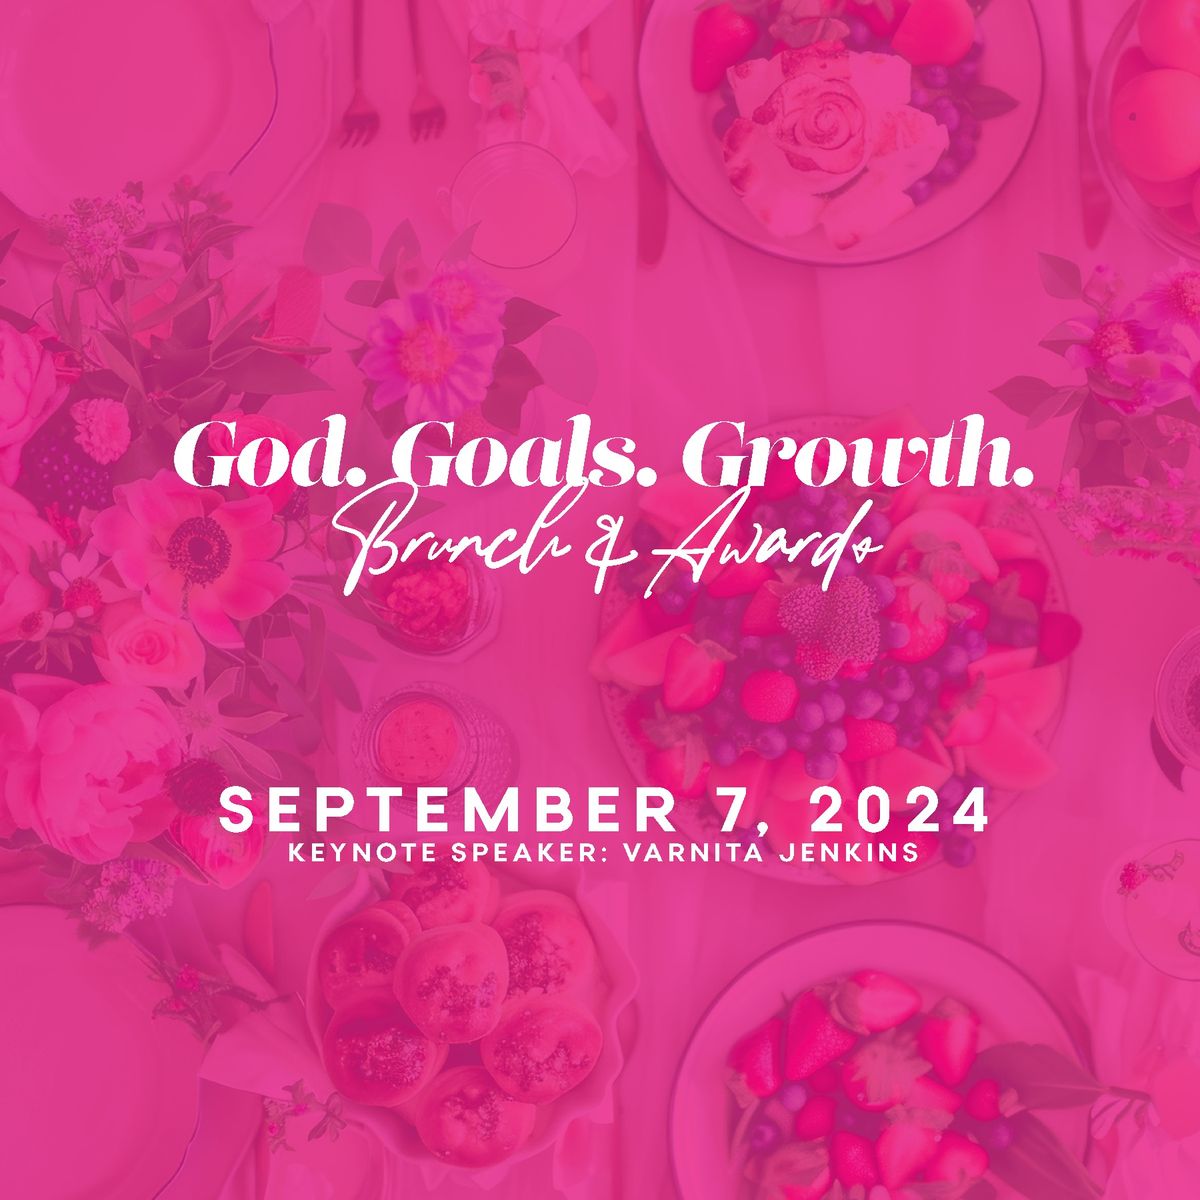 God. Goals. Growth. Brunch & Awards